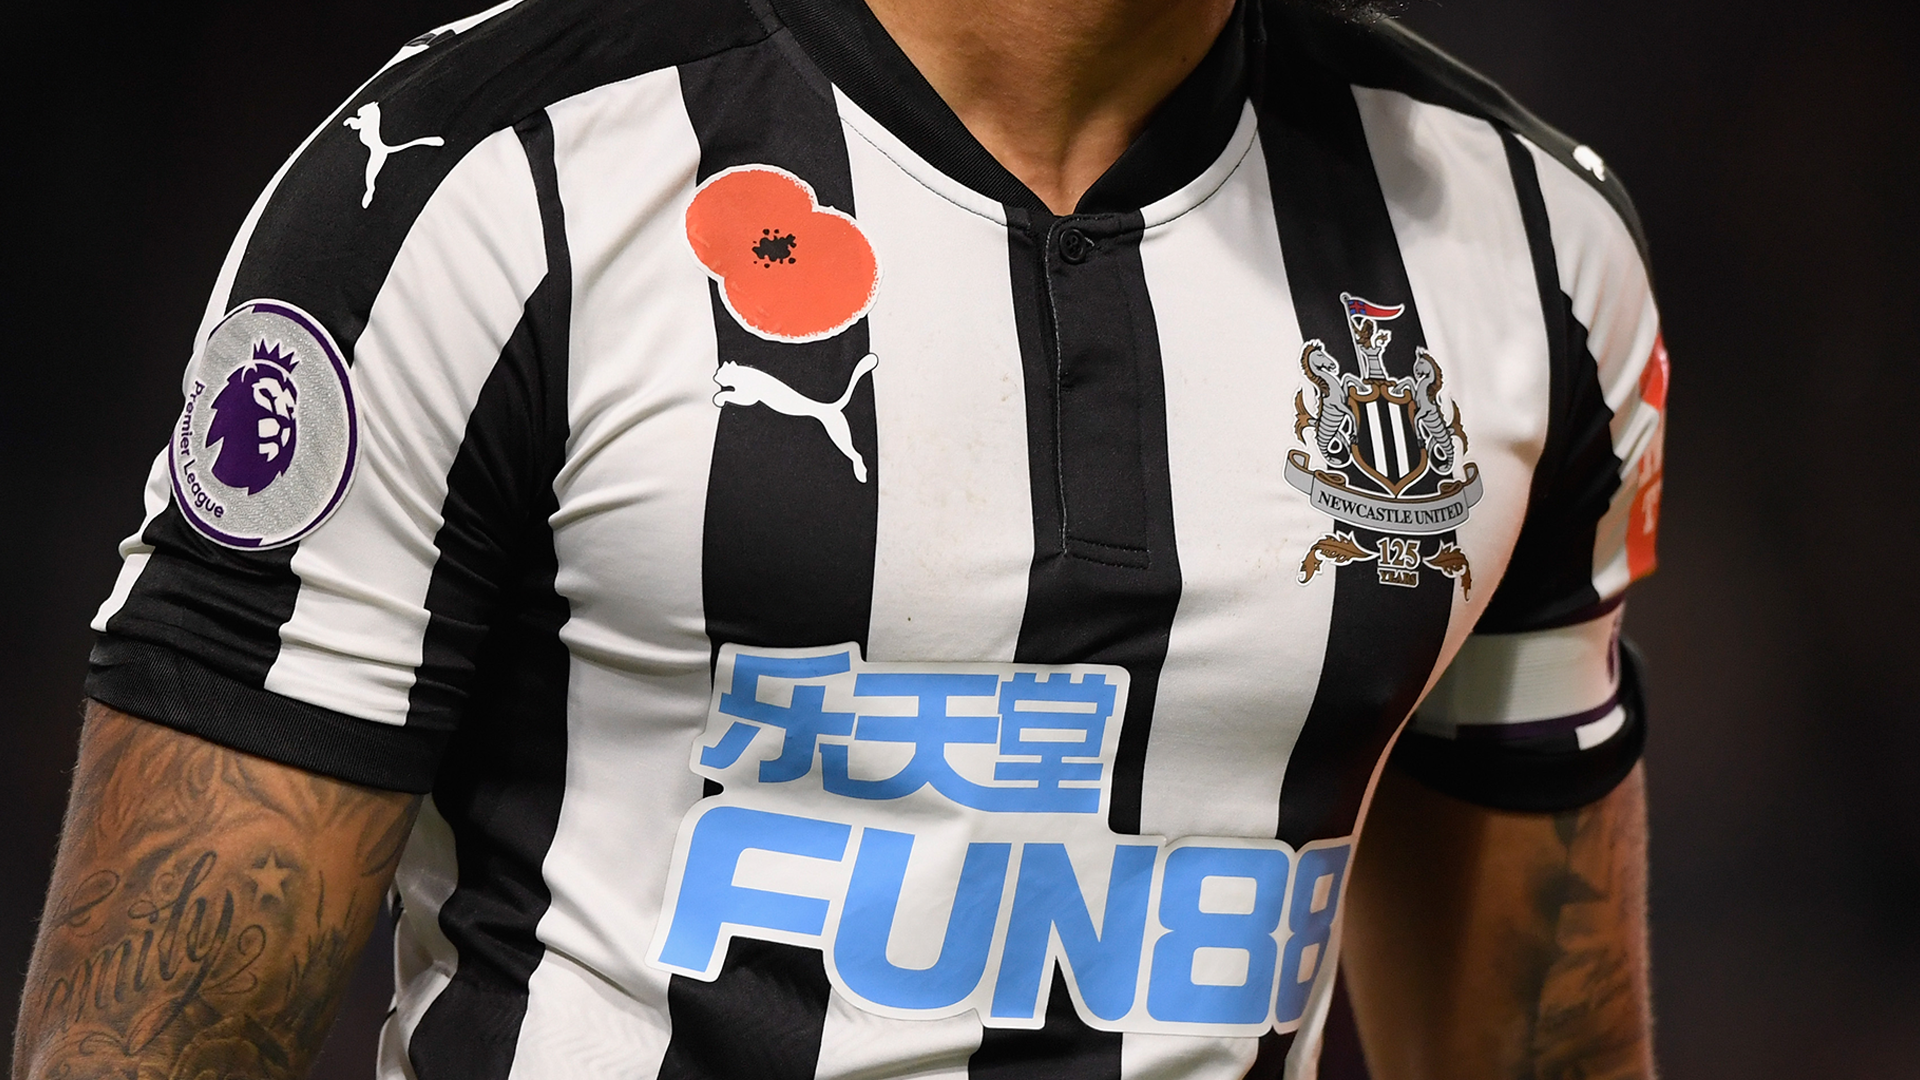 Pin on Football Shirts - Clubs